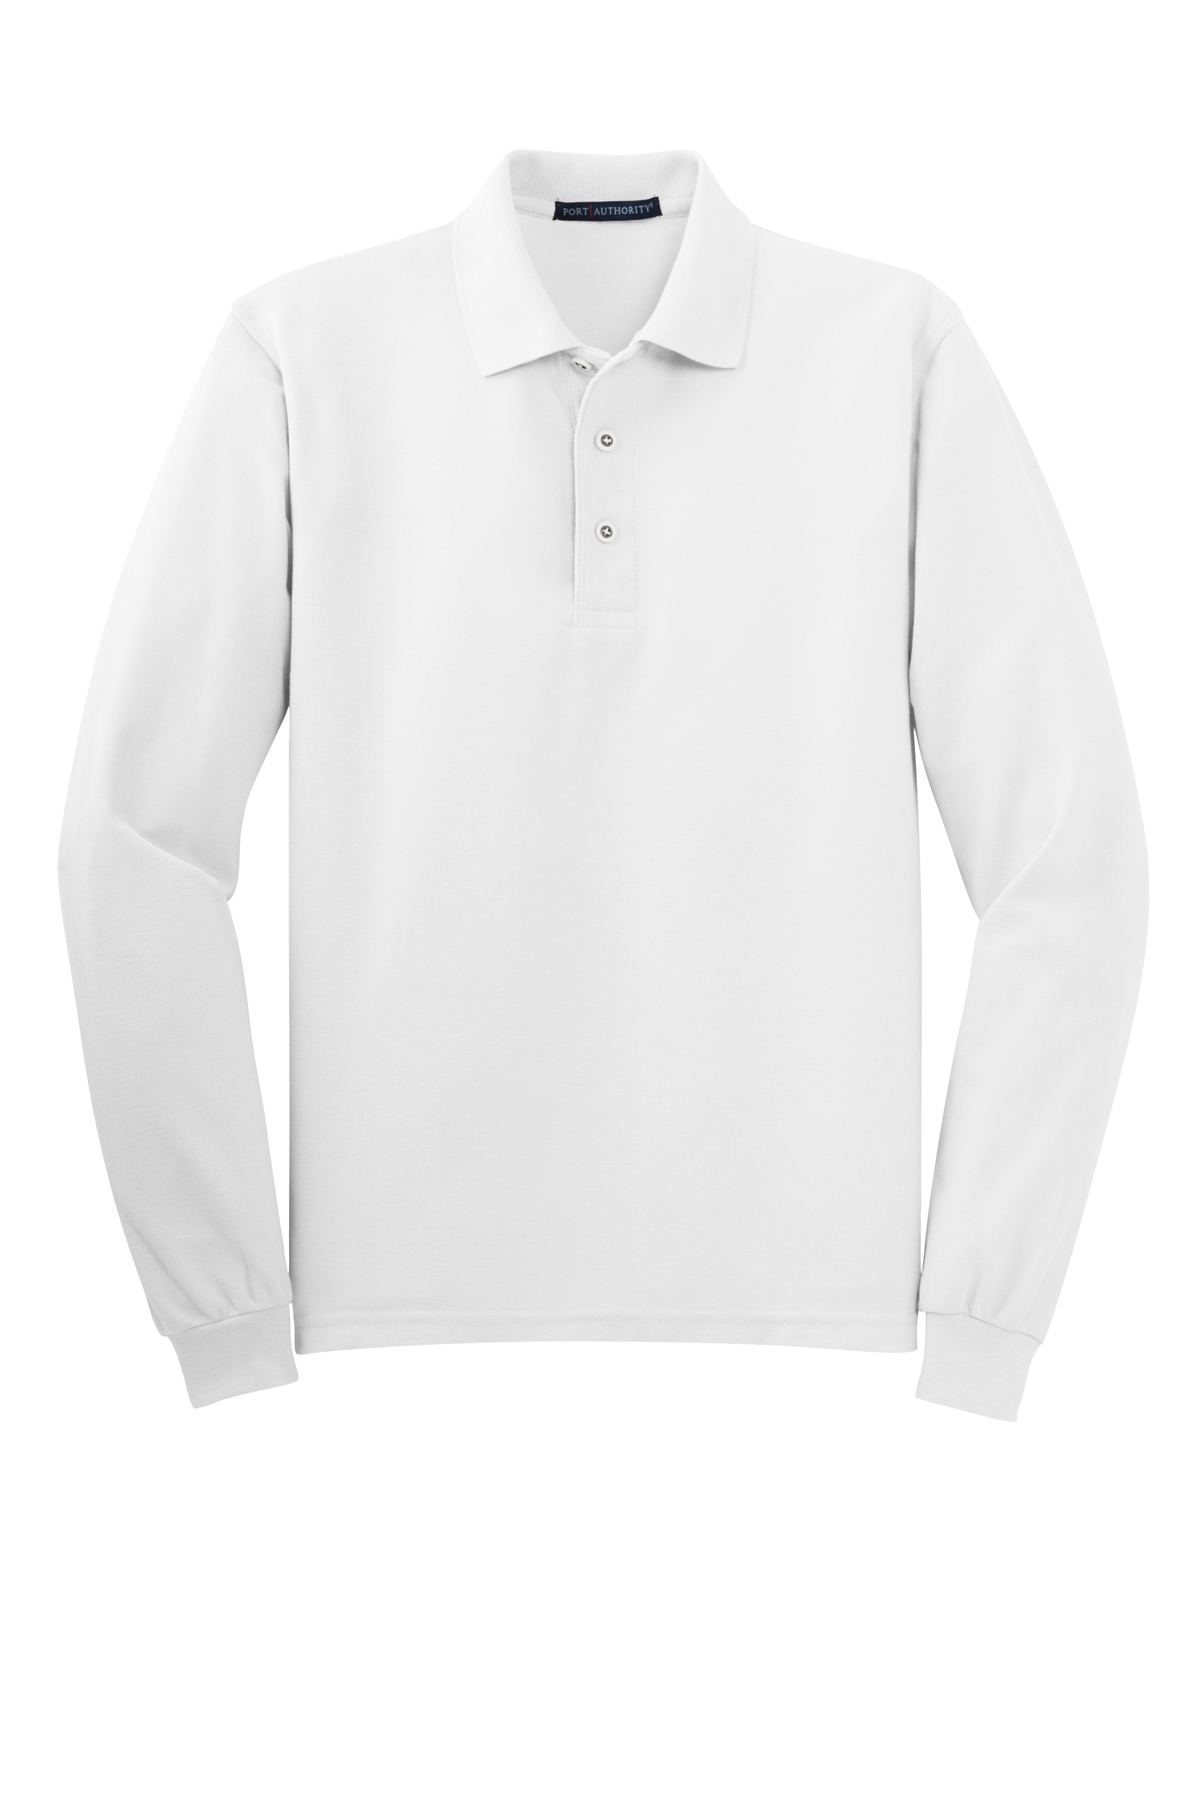 aesthetic white polo longsleeves blouse